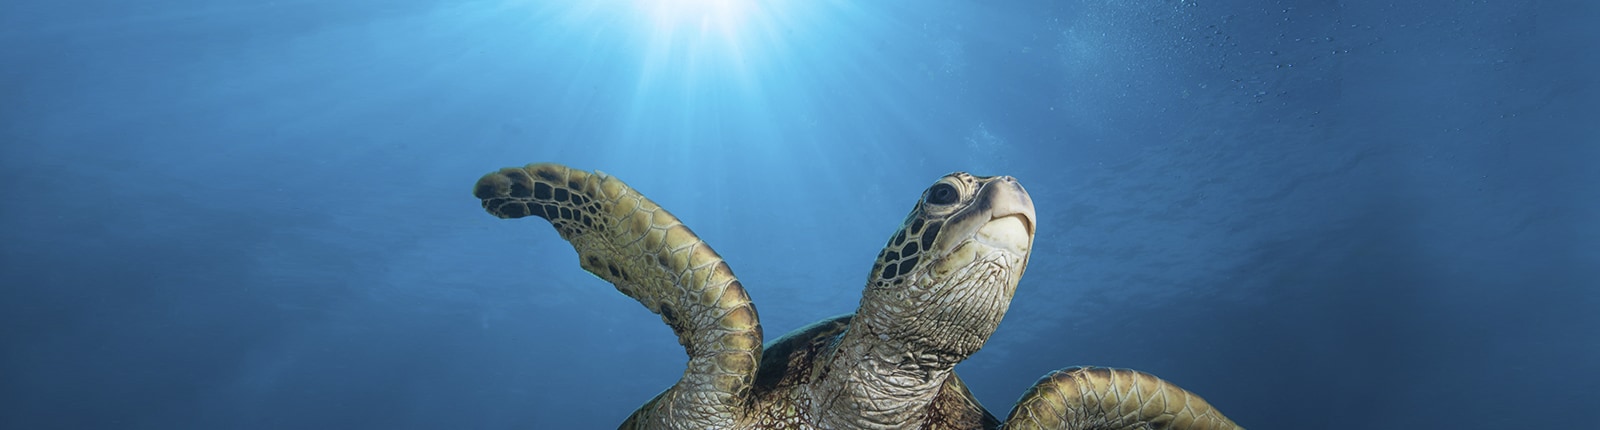 Close up of a sea turtle underwater in Bermuda